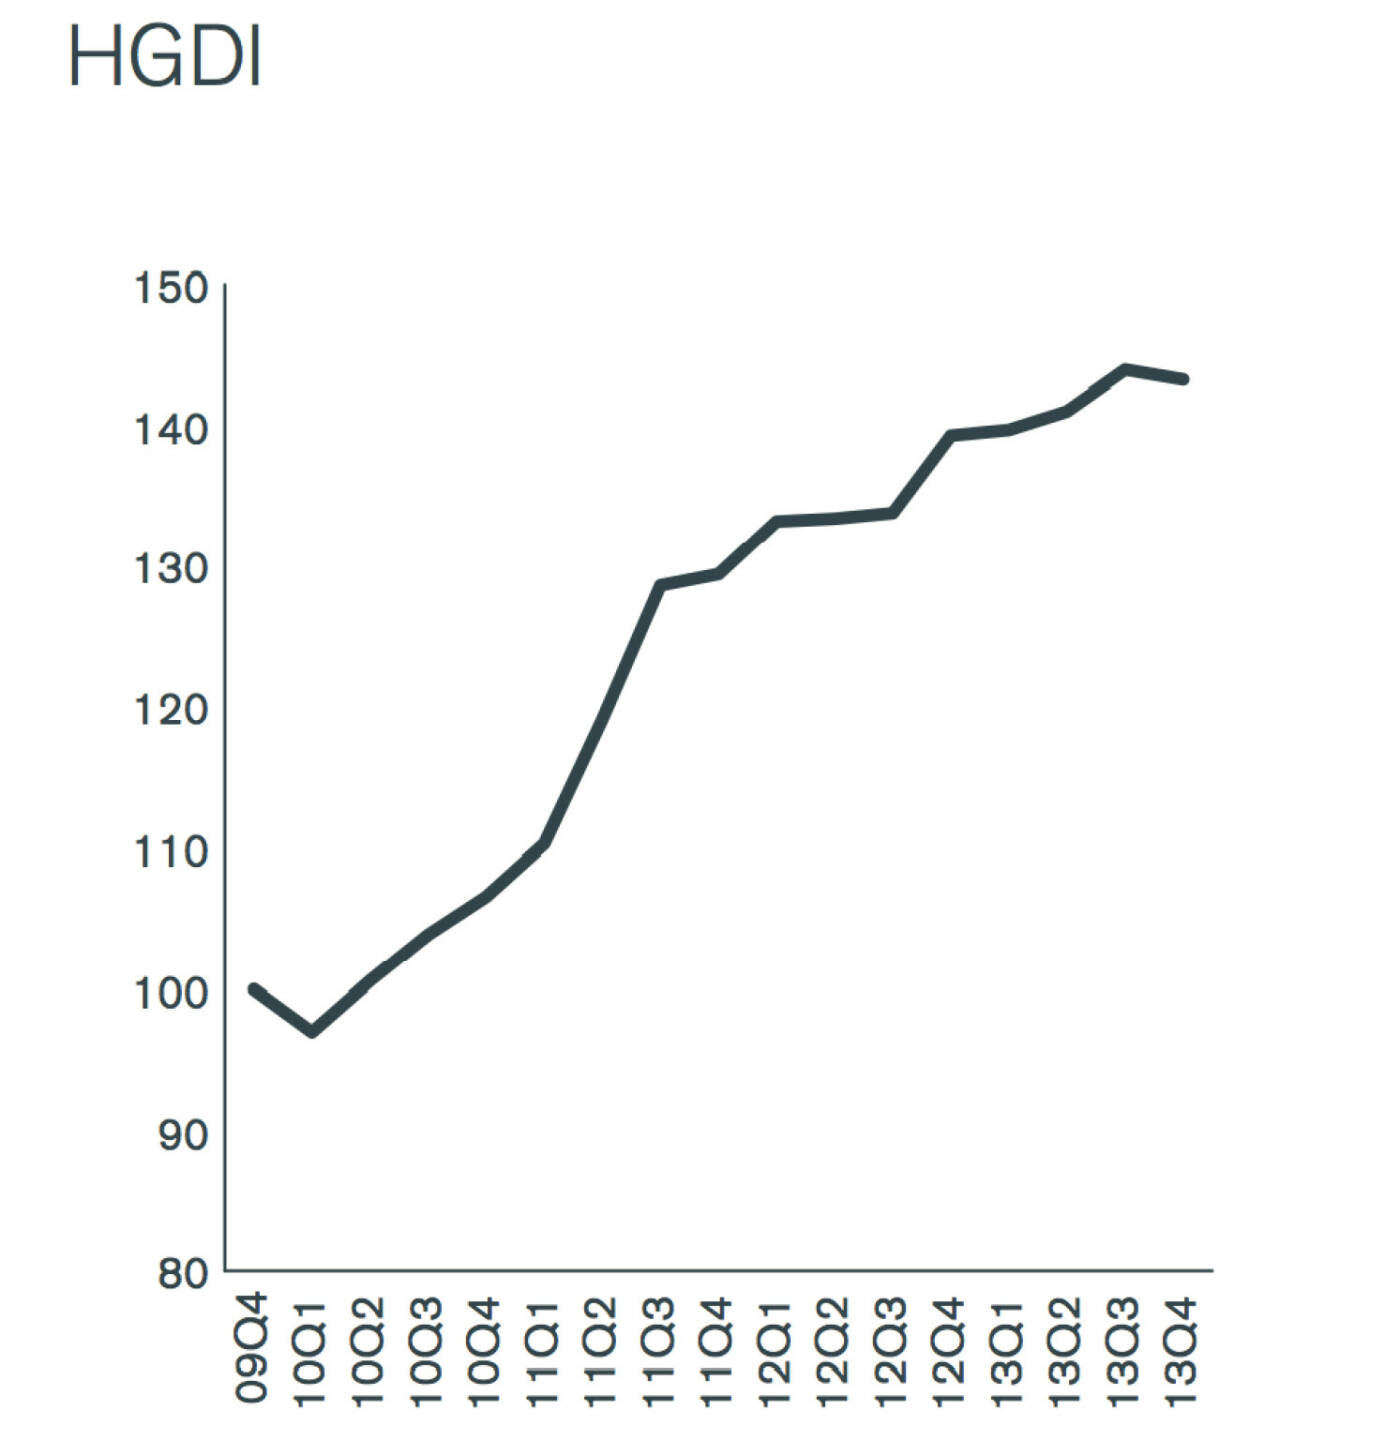 Henderson Global Dividend Index (HGDI)